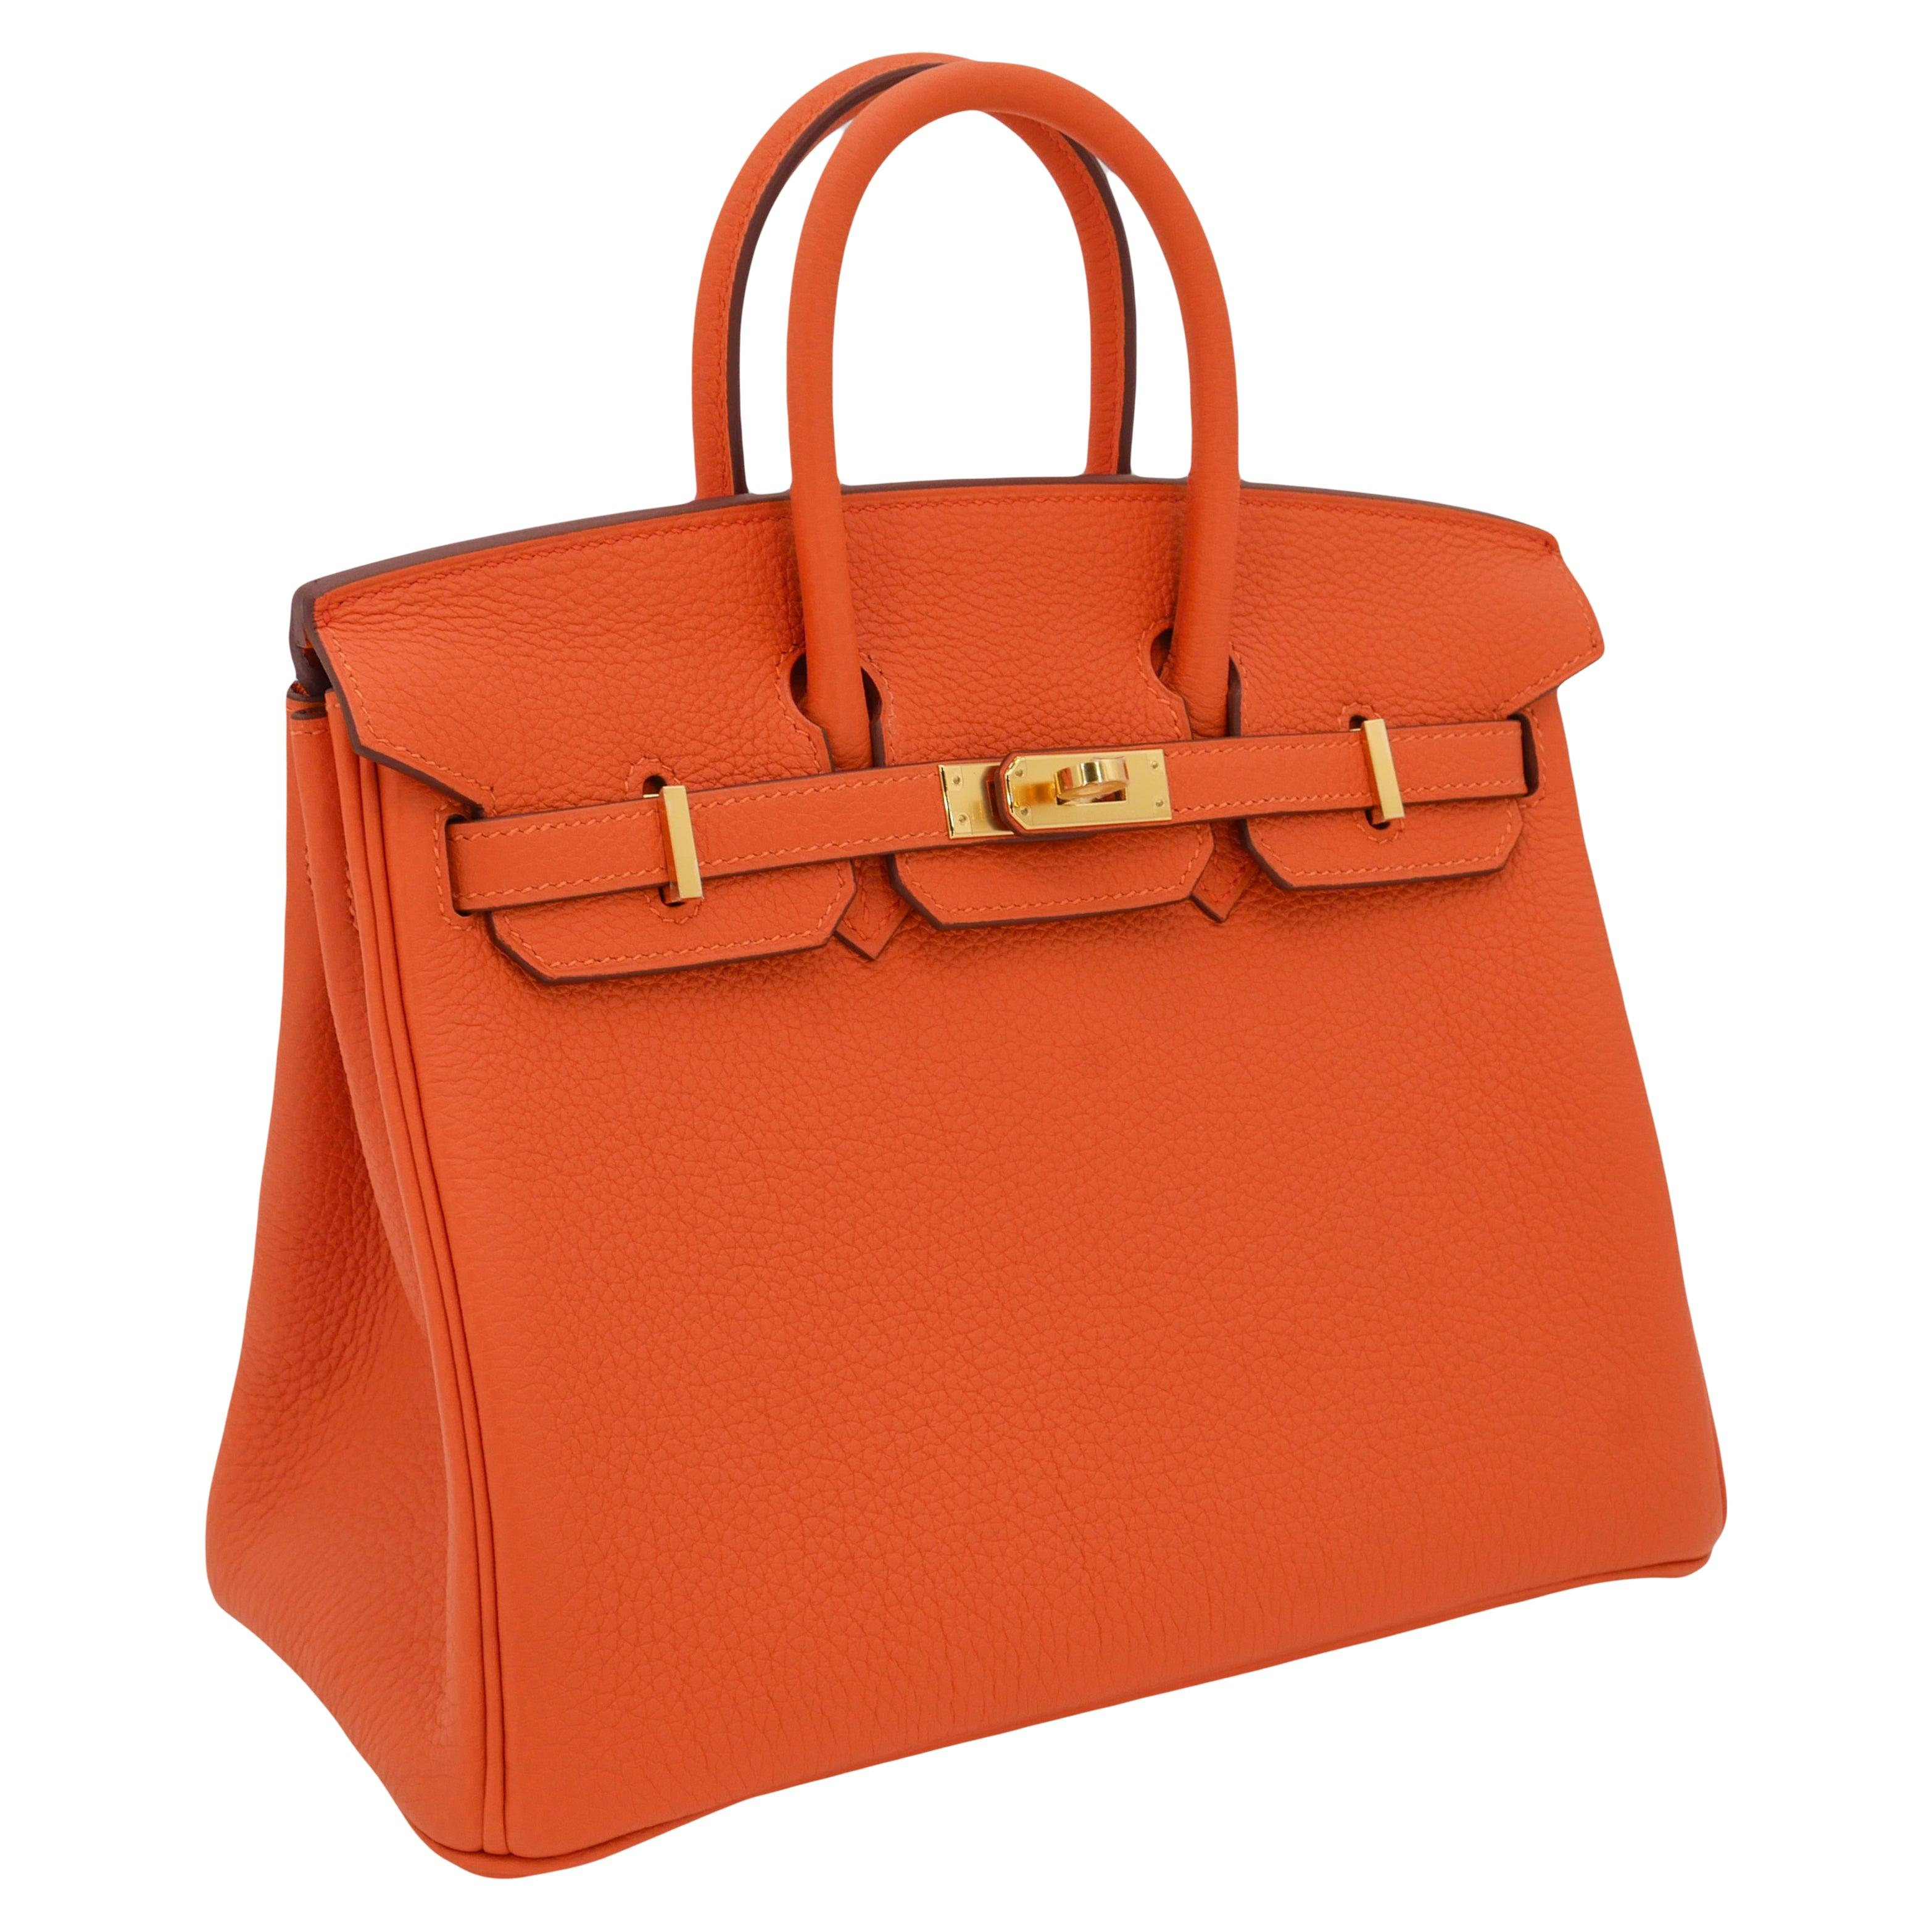 Marke: Hermès
Stil: Birkin
Größe: 25cm
Farbe: Orange
MATERIAL: Togo-Leder
Hardware: Gold (GHW)
Abmessungen: 10